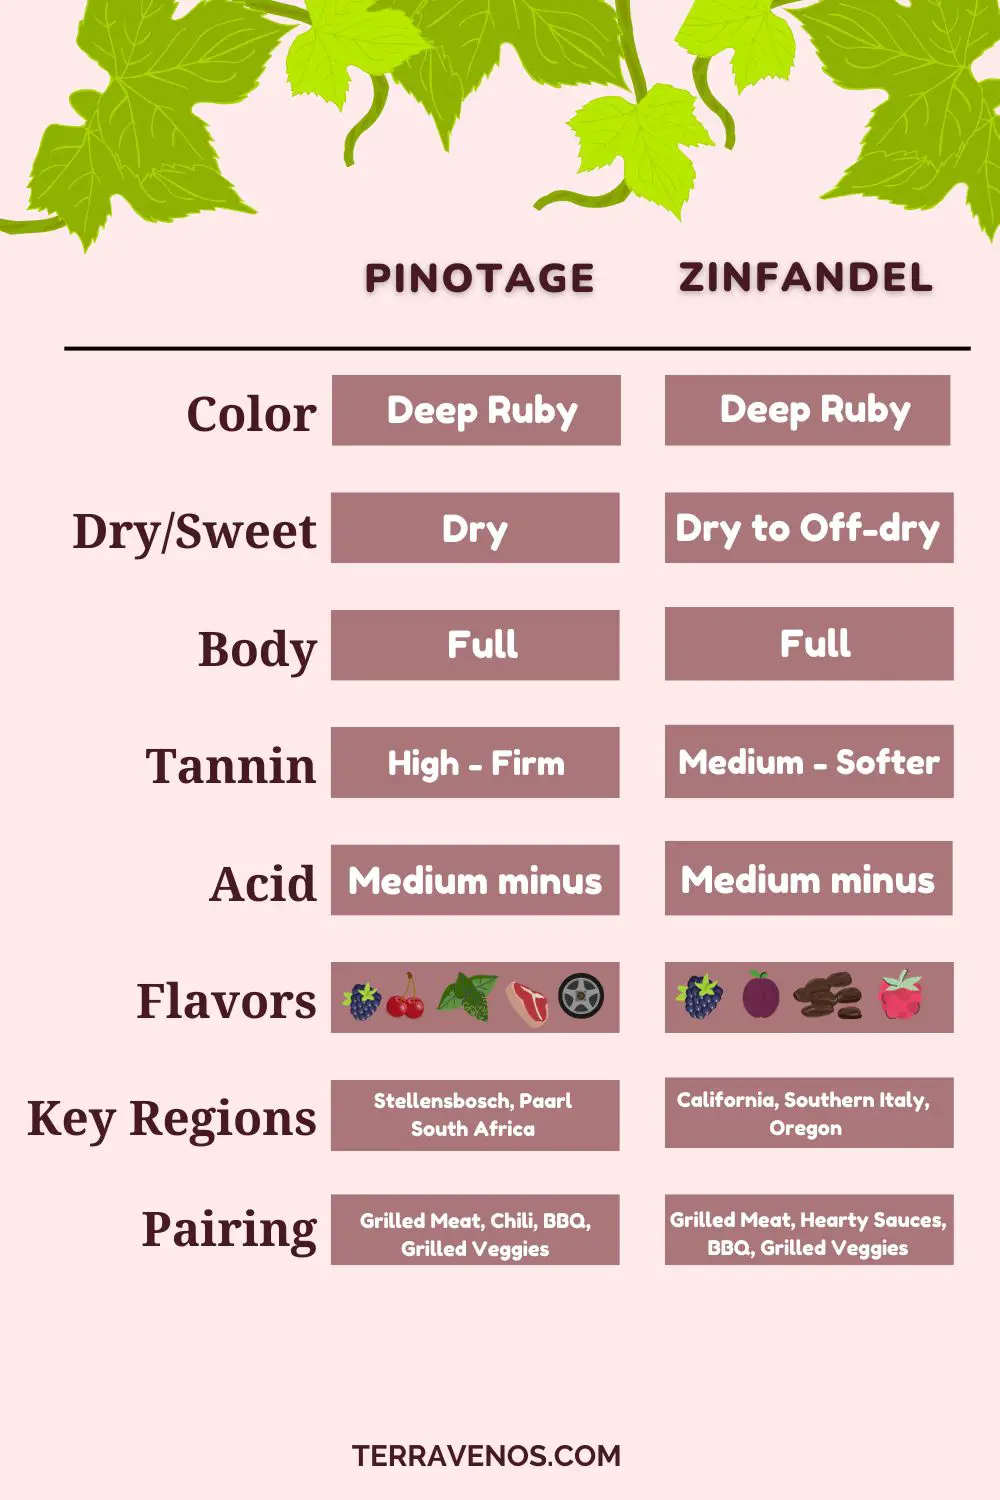 zinfandel vs pinotage infographic